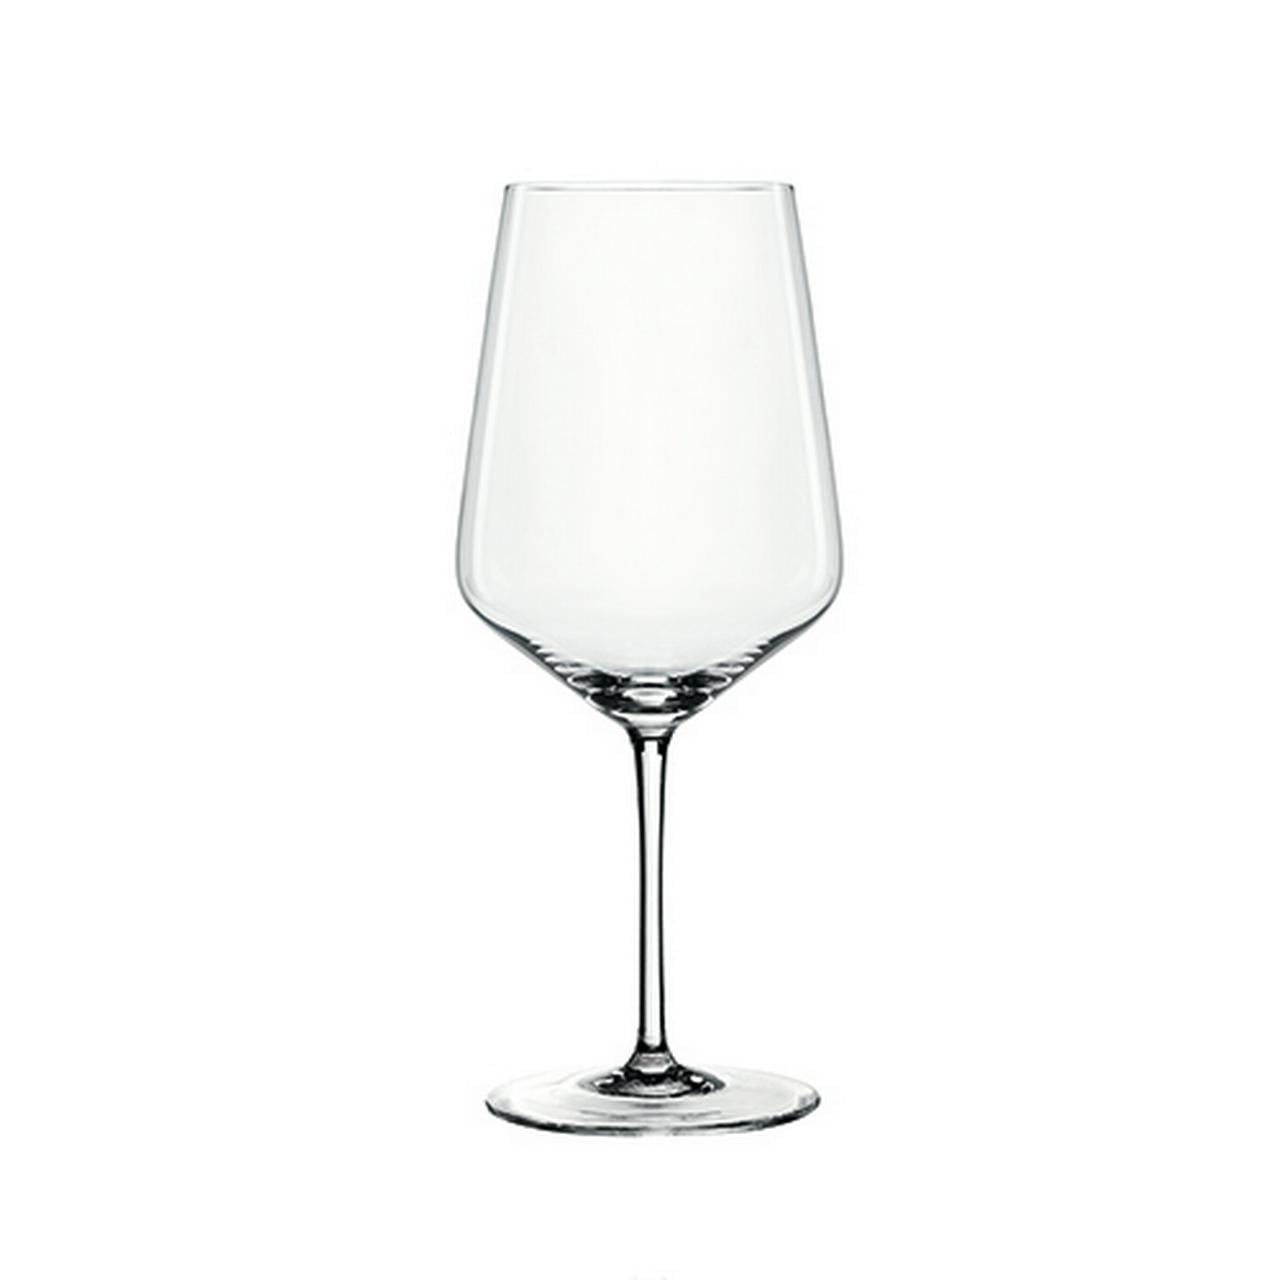 NEW Spiegelau Vino Grande Wine Decanter 1 Liter Lead Free Crystal 